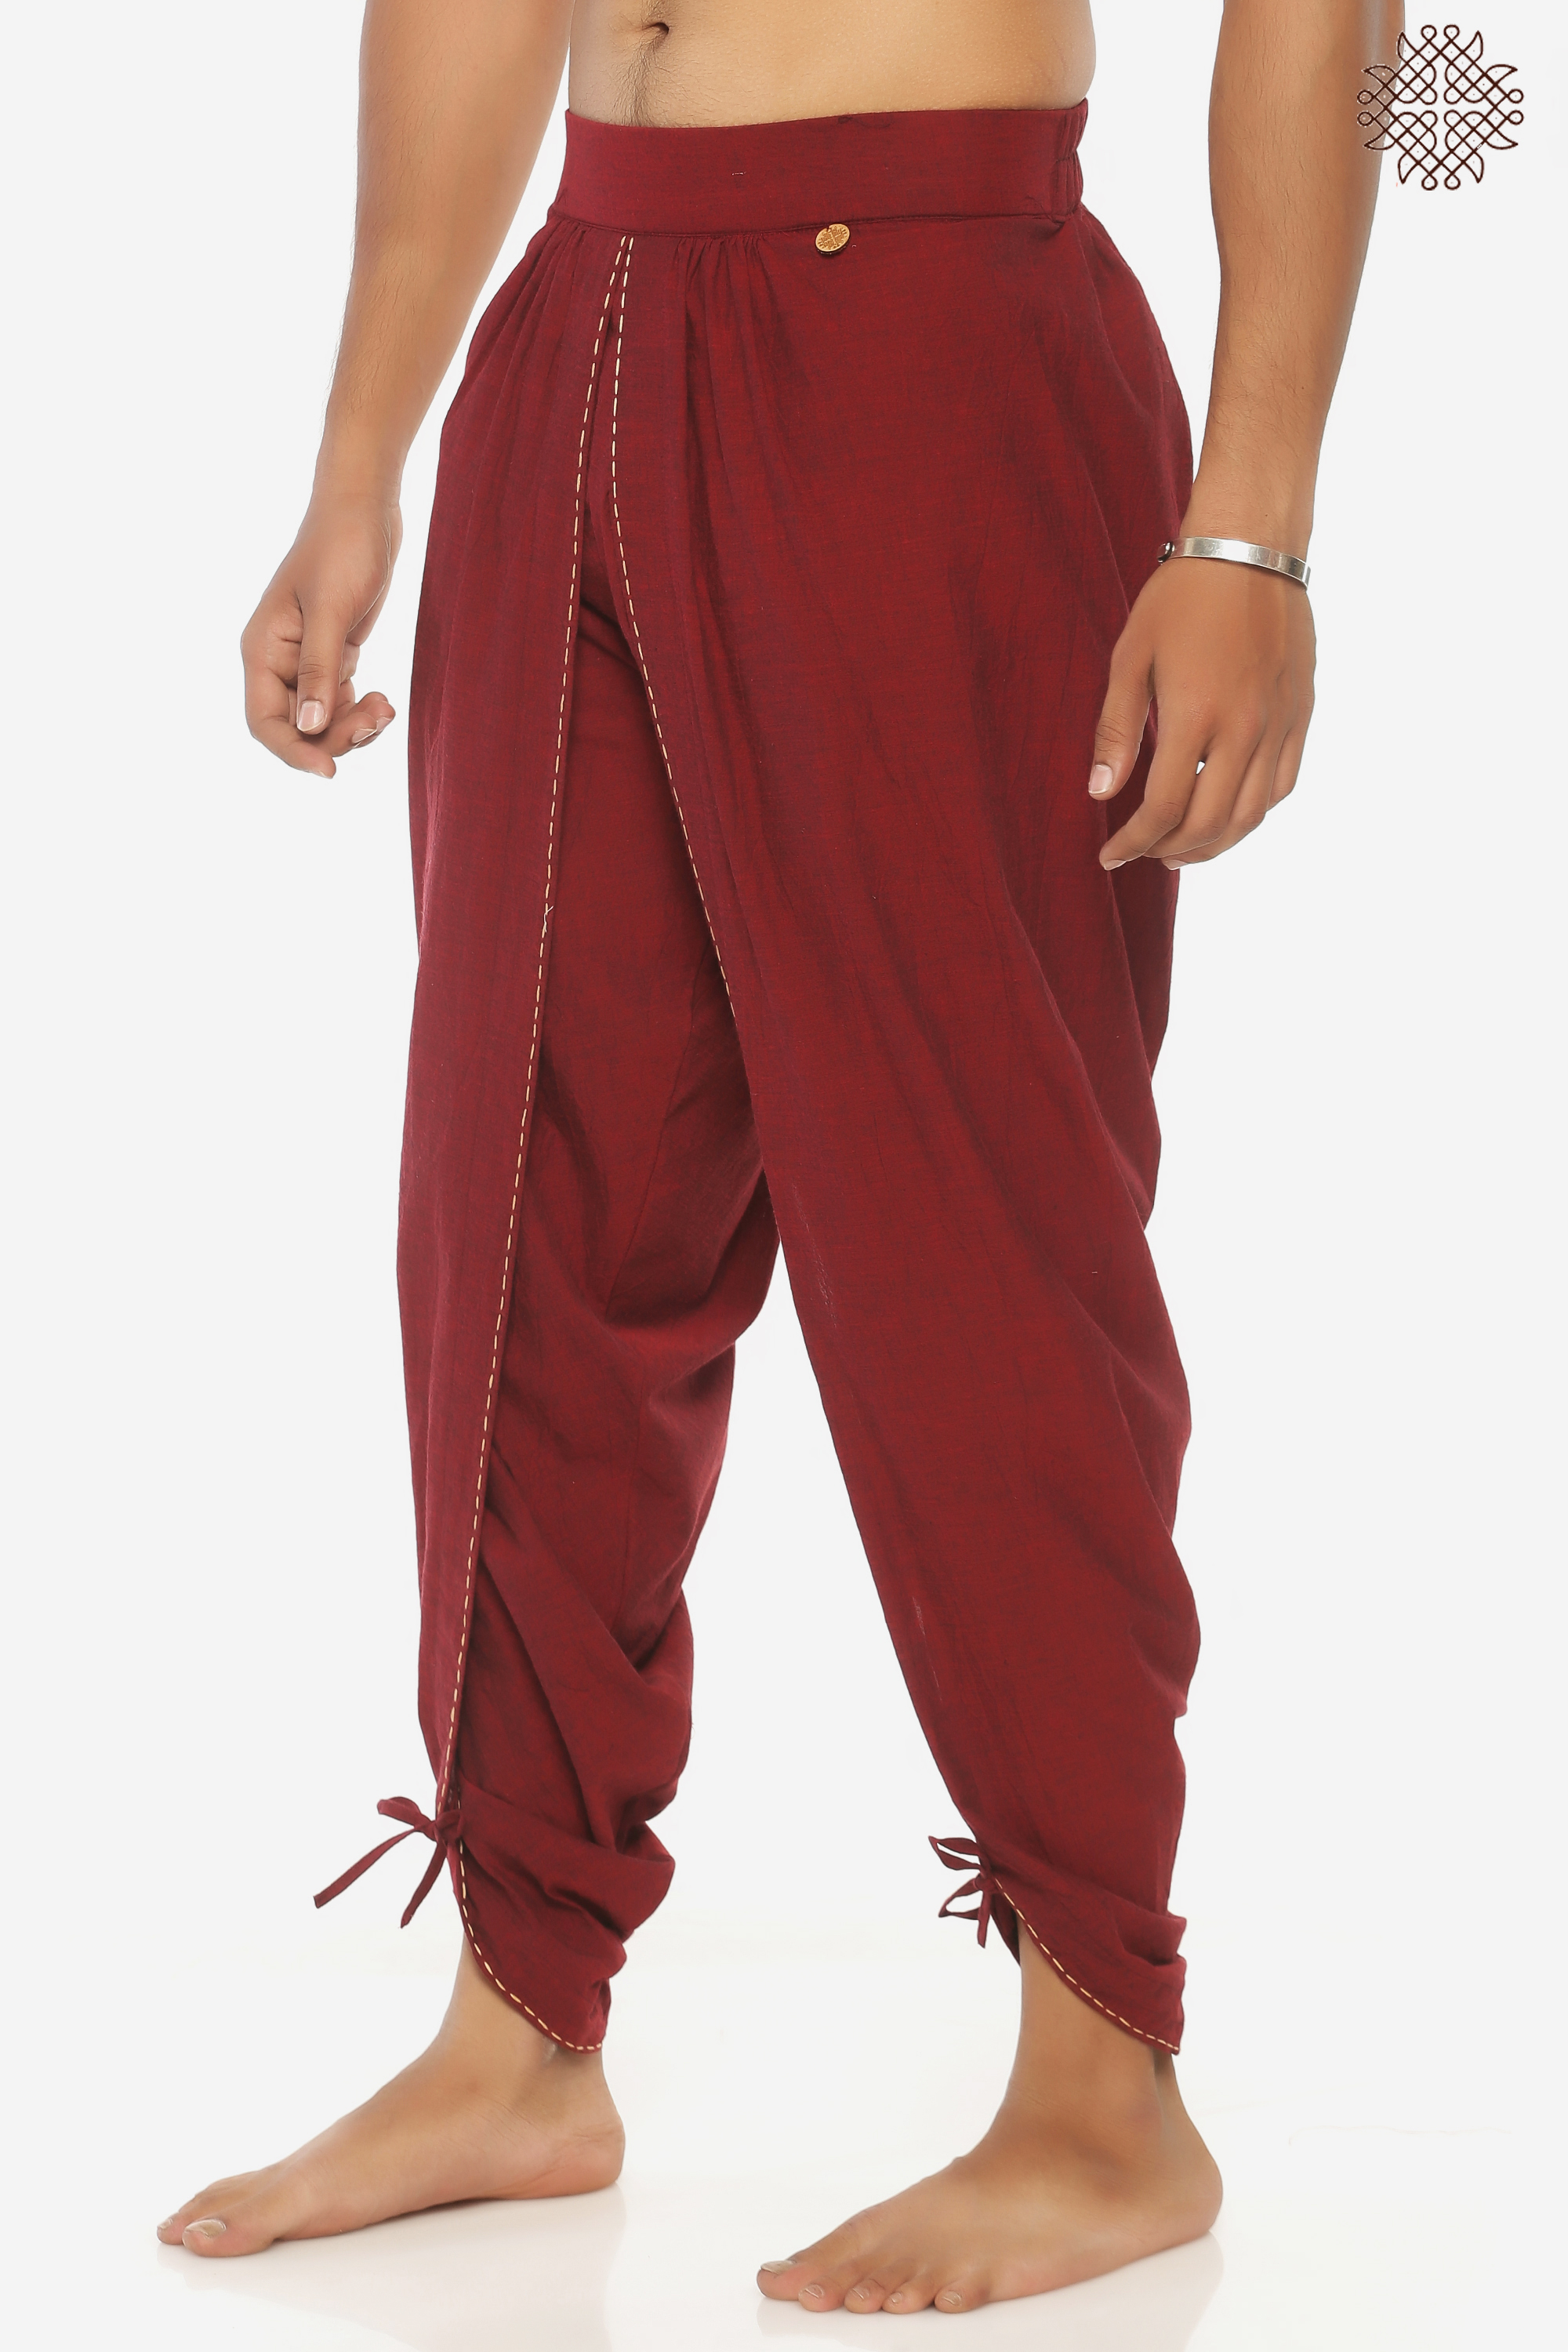 Dhoti Pants with Tops - Buy Dhoti Pants with Tops Online | Abhishti